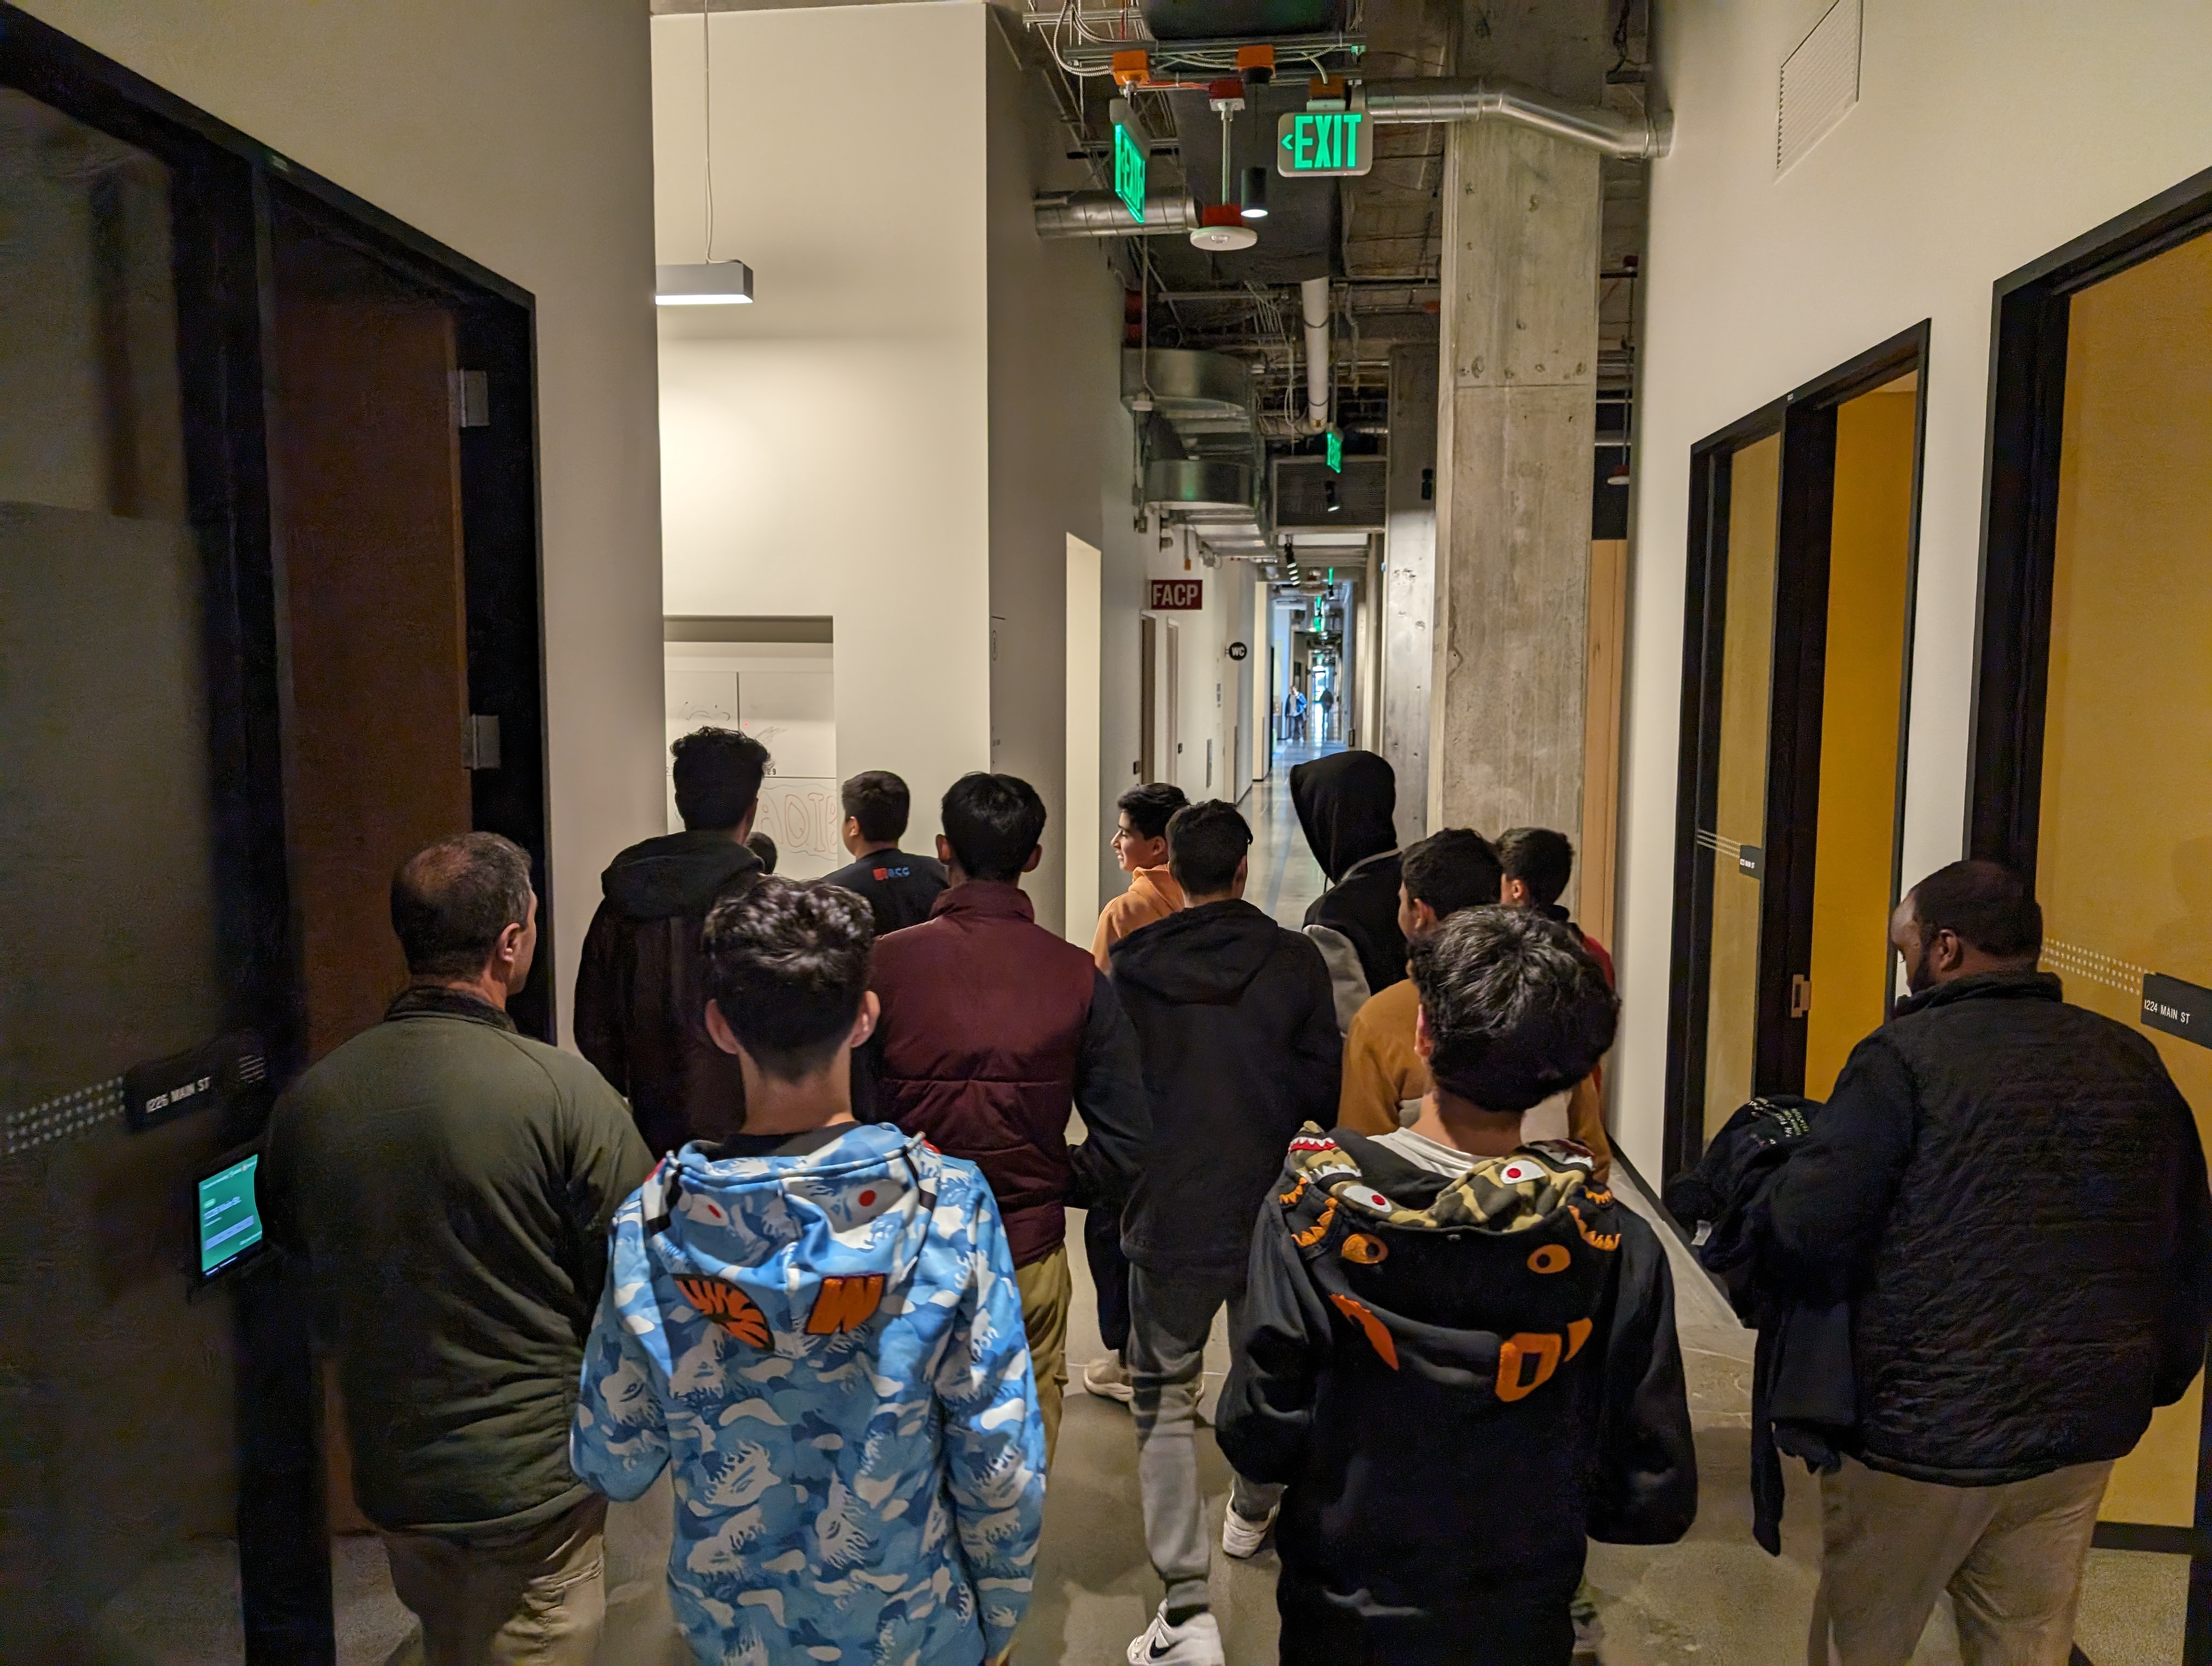 Students walking in a hallway